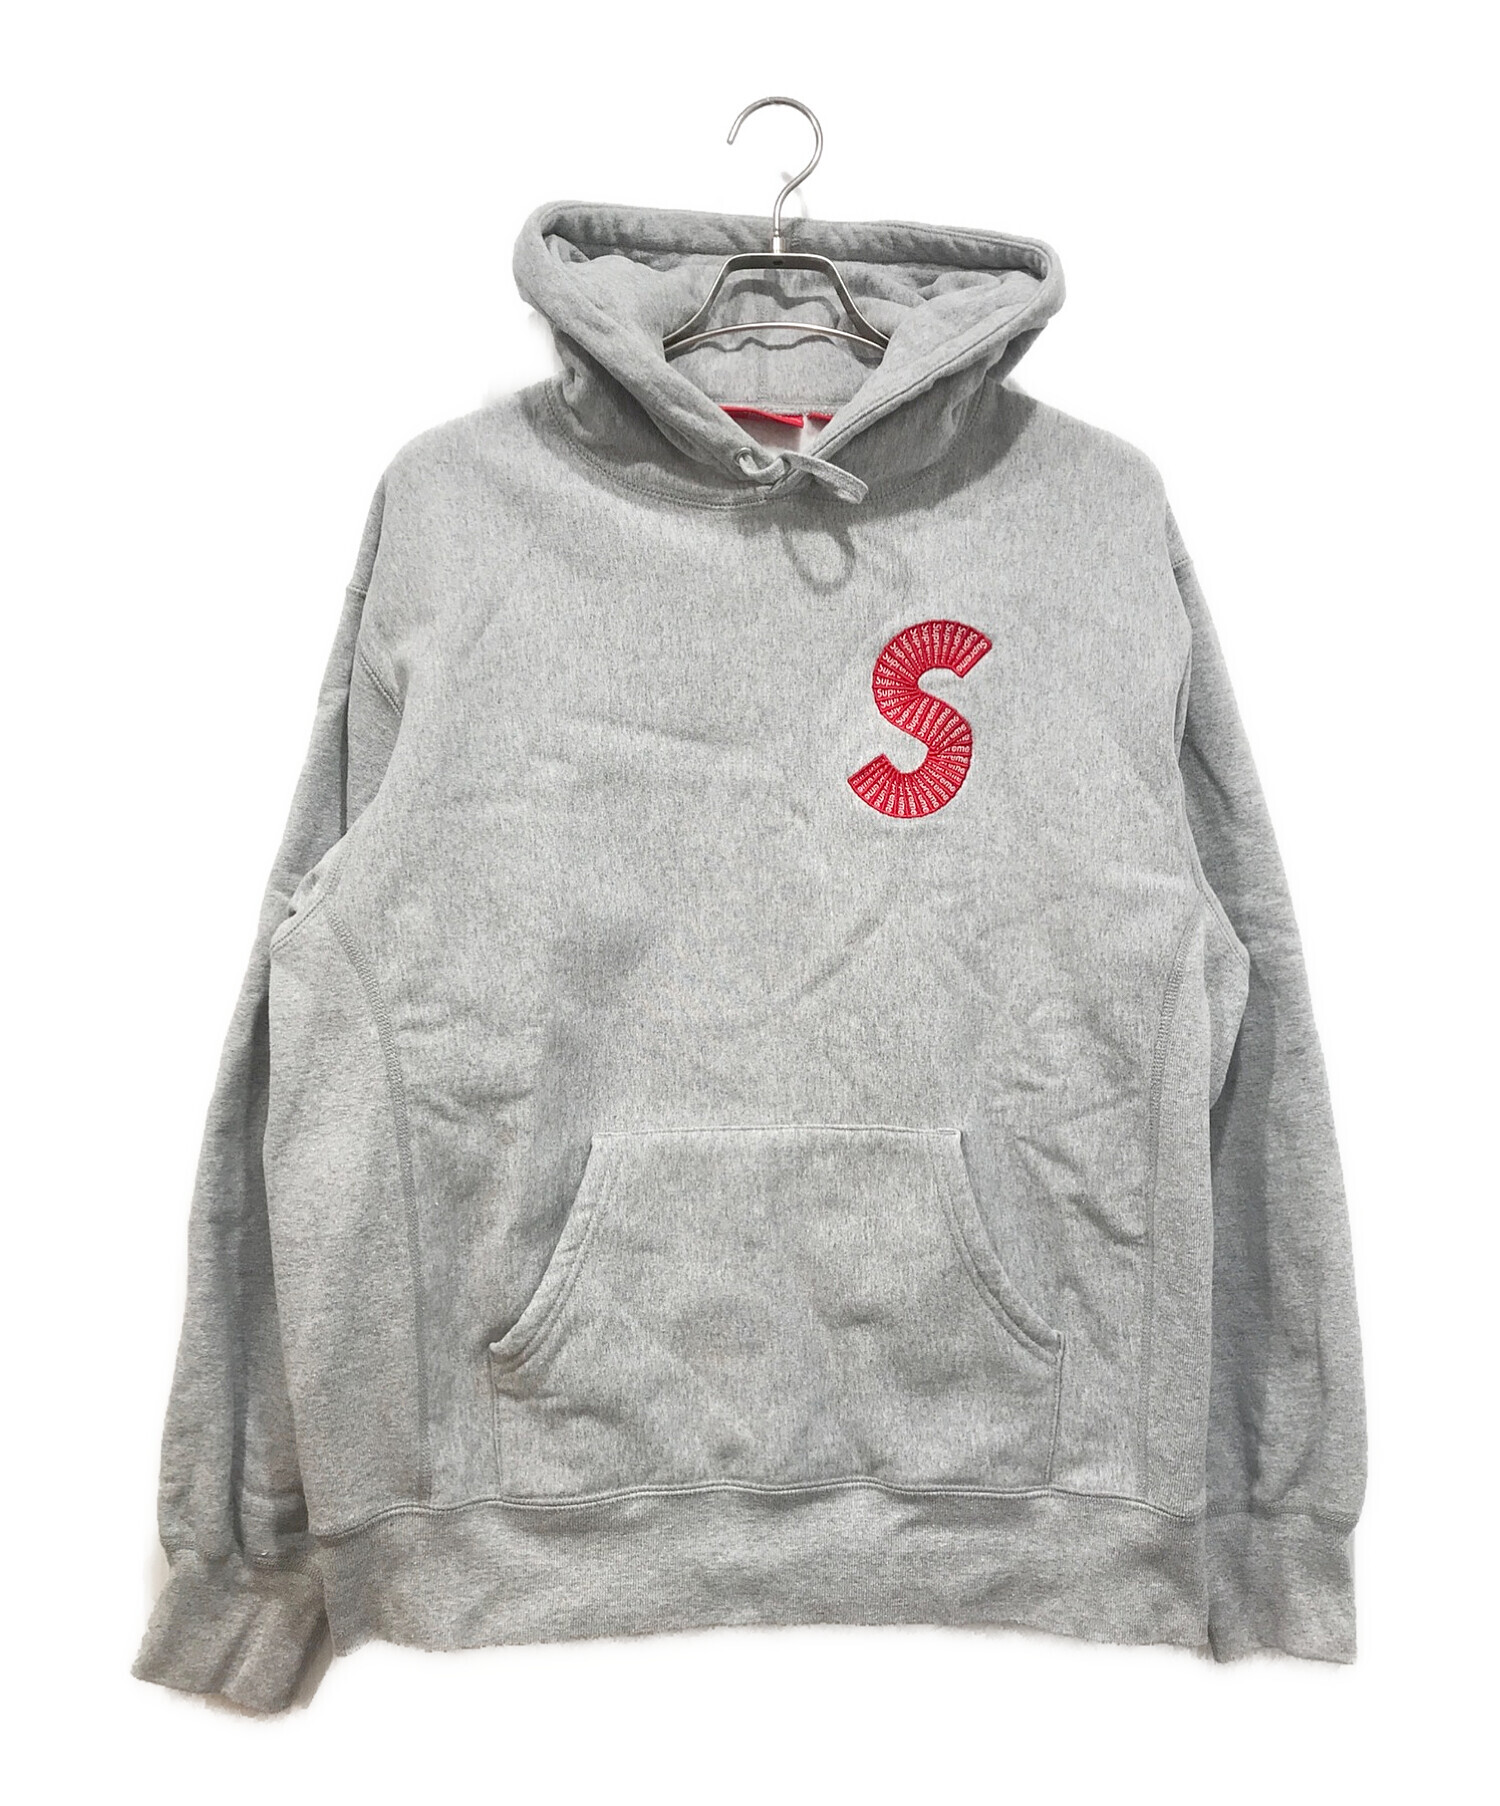 S Logo Hooded Sweatshirt Mサイズ グレー